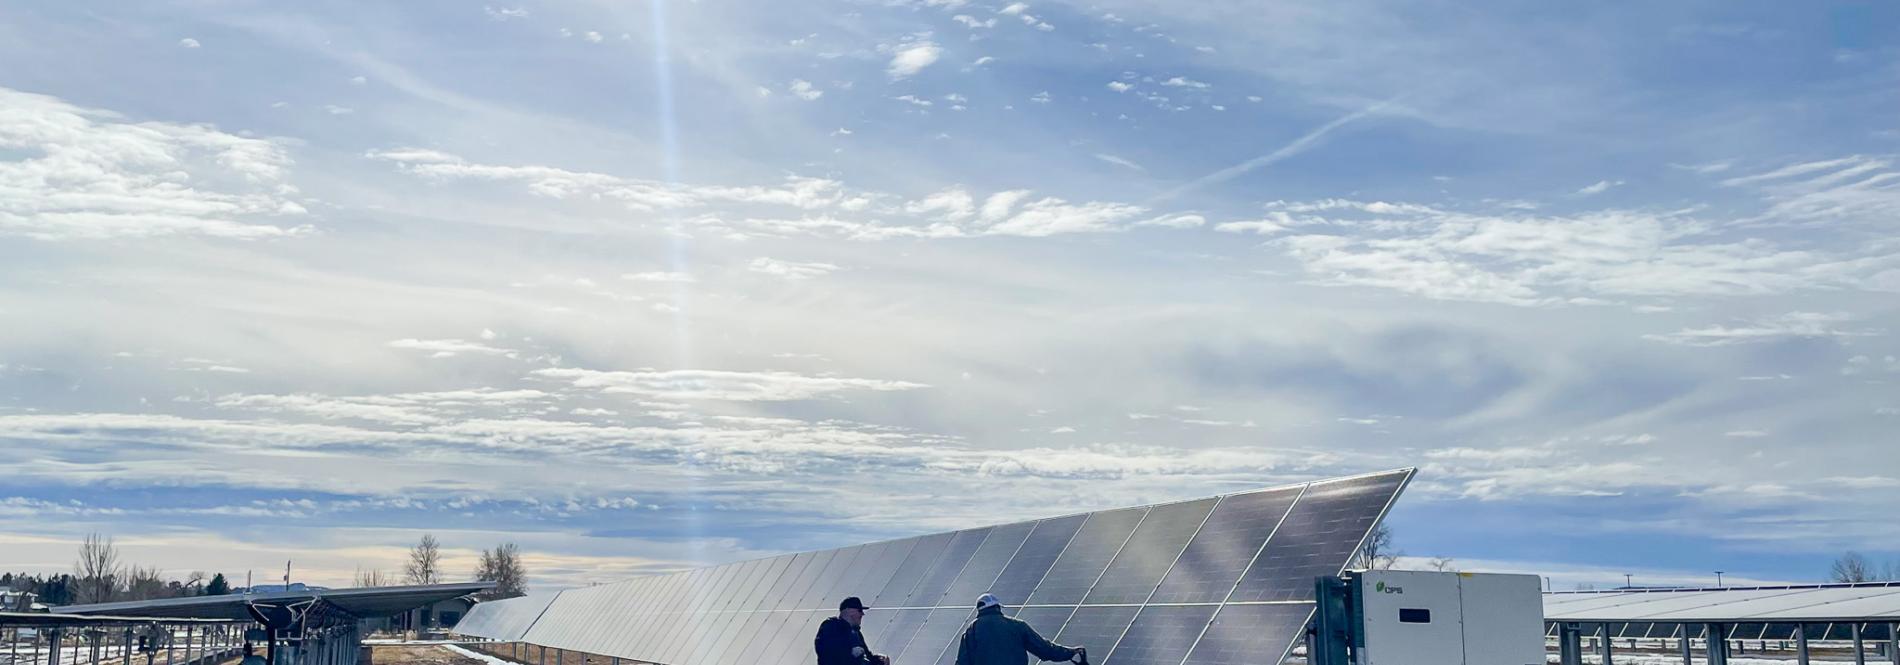 LPEA's Sunnyside Community Solar Garden